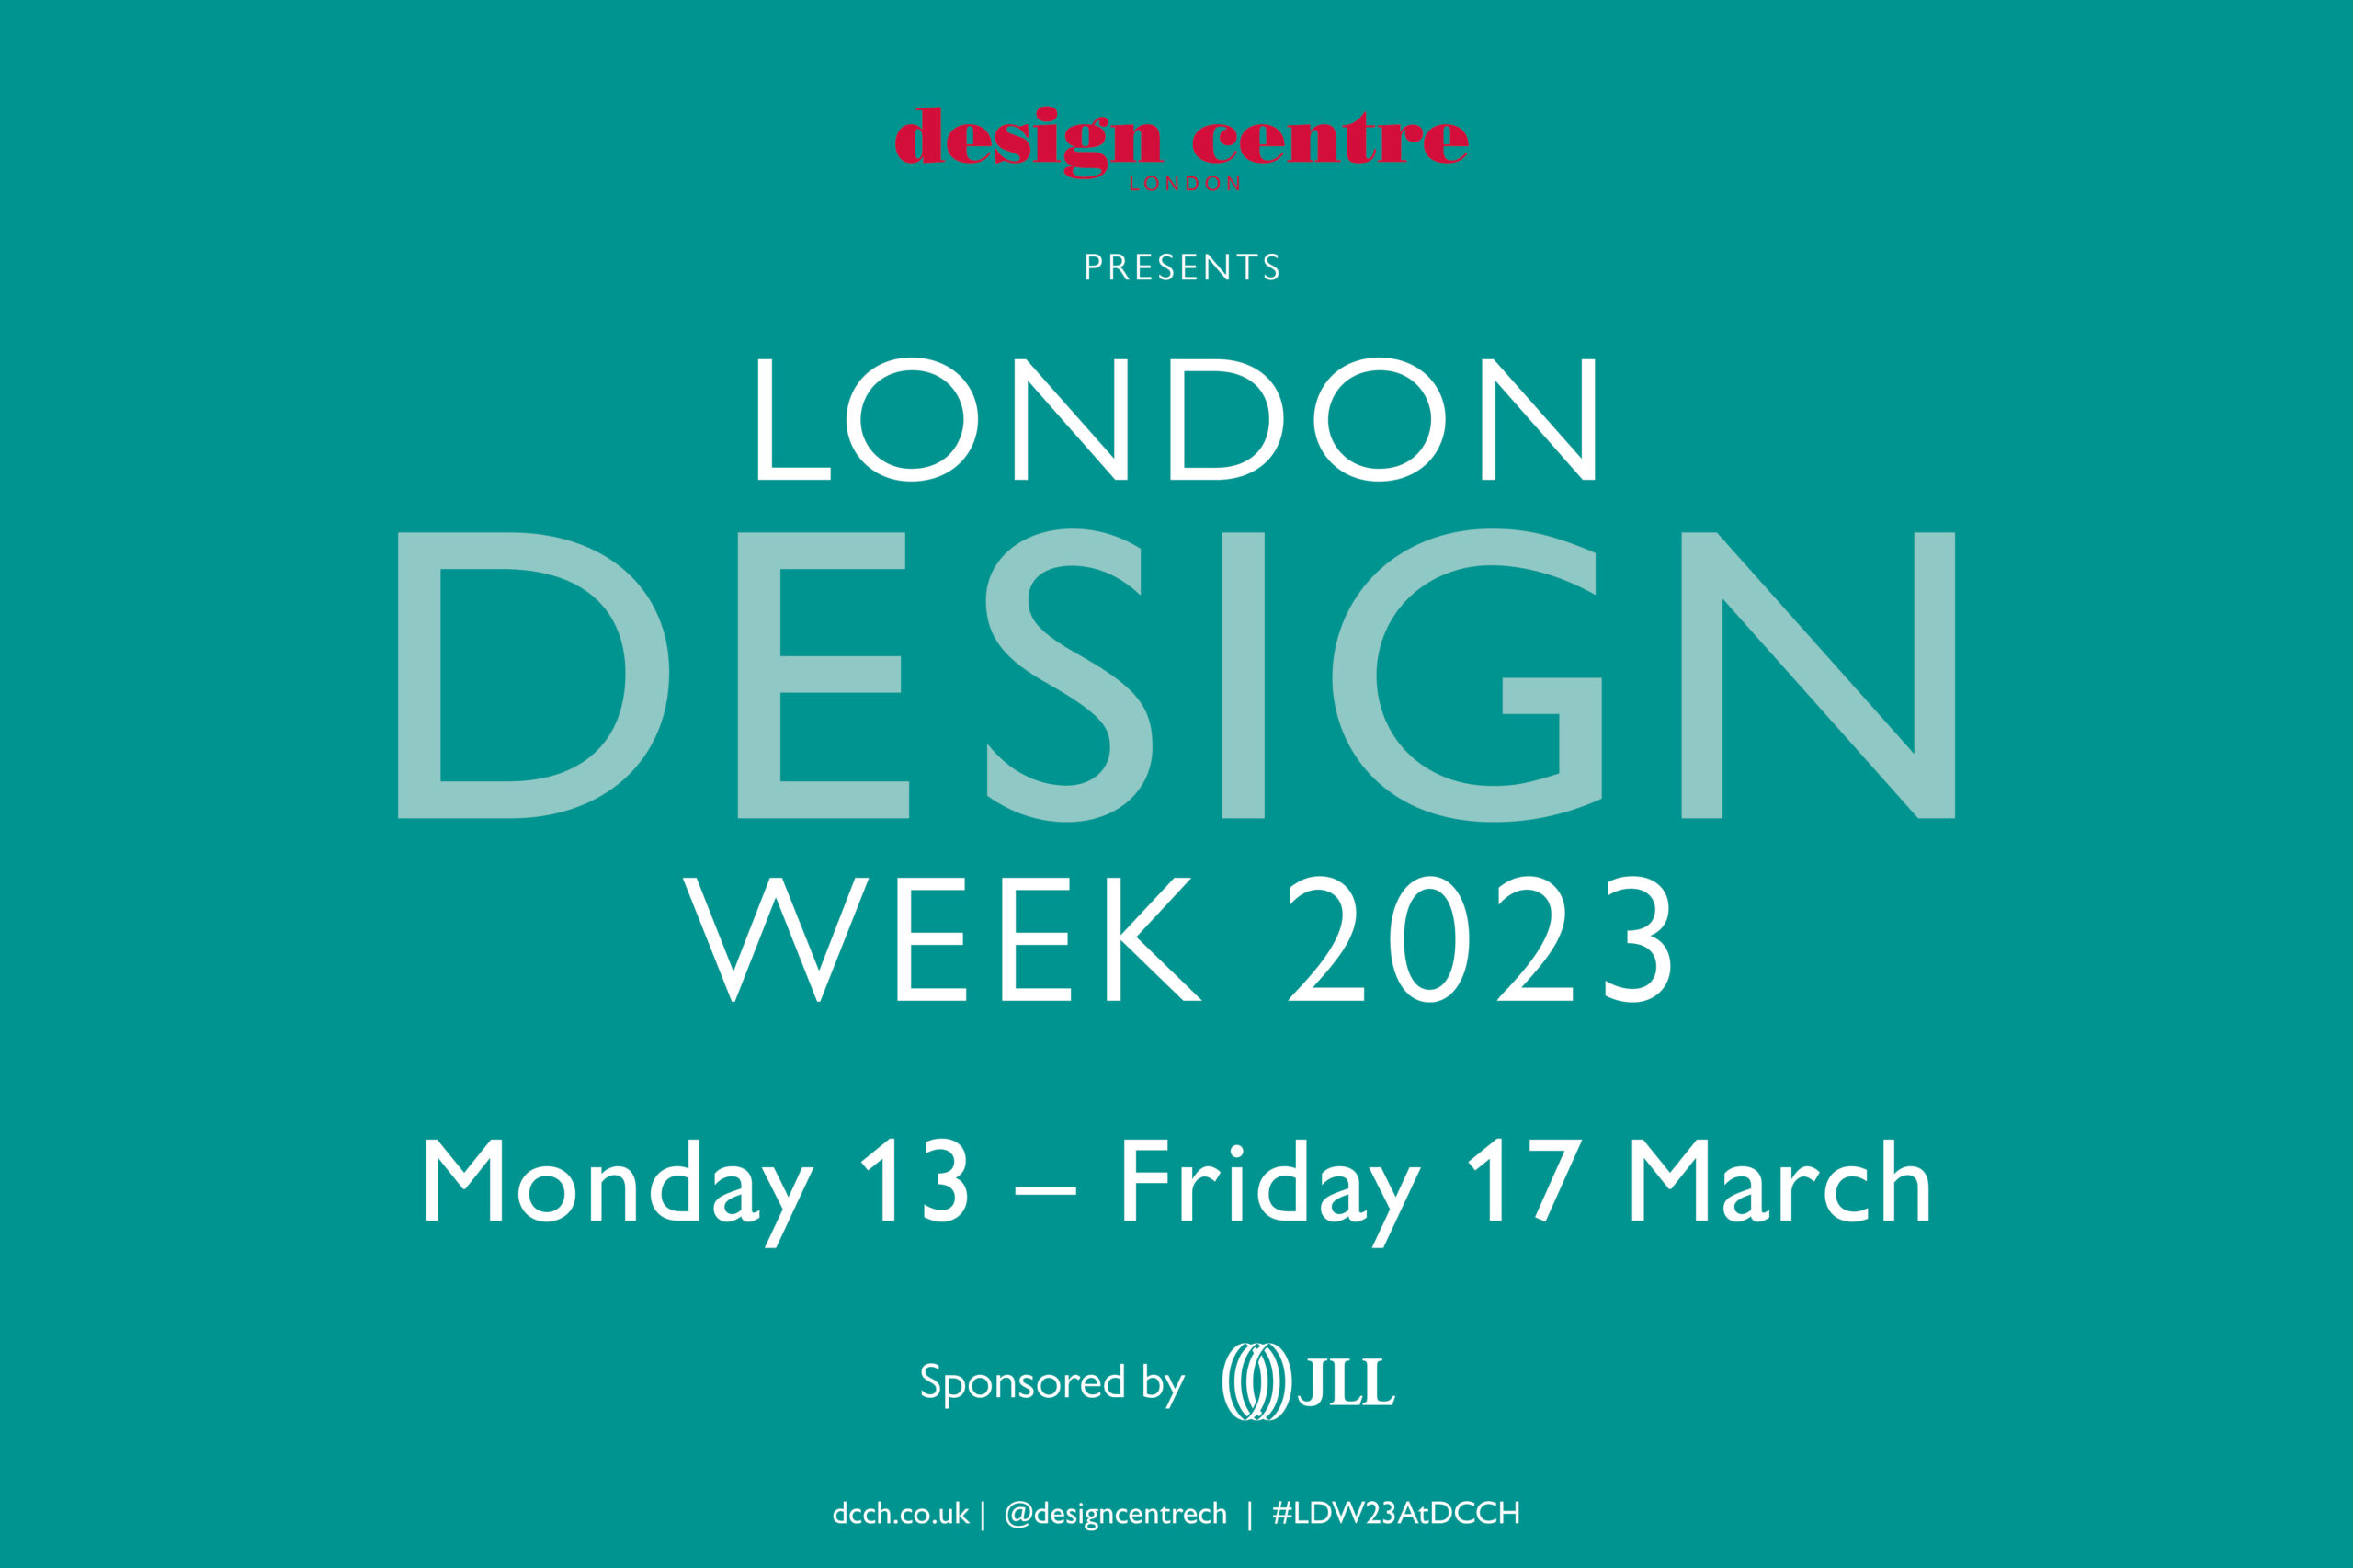 London Design Week 2023 Design Centre Chelsea Harbour